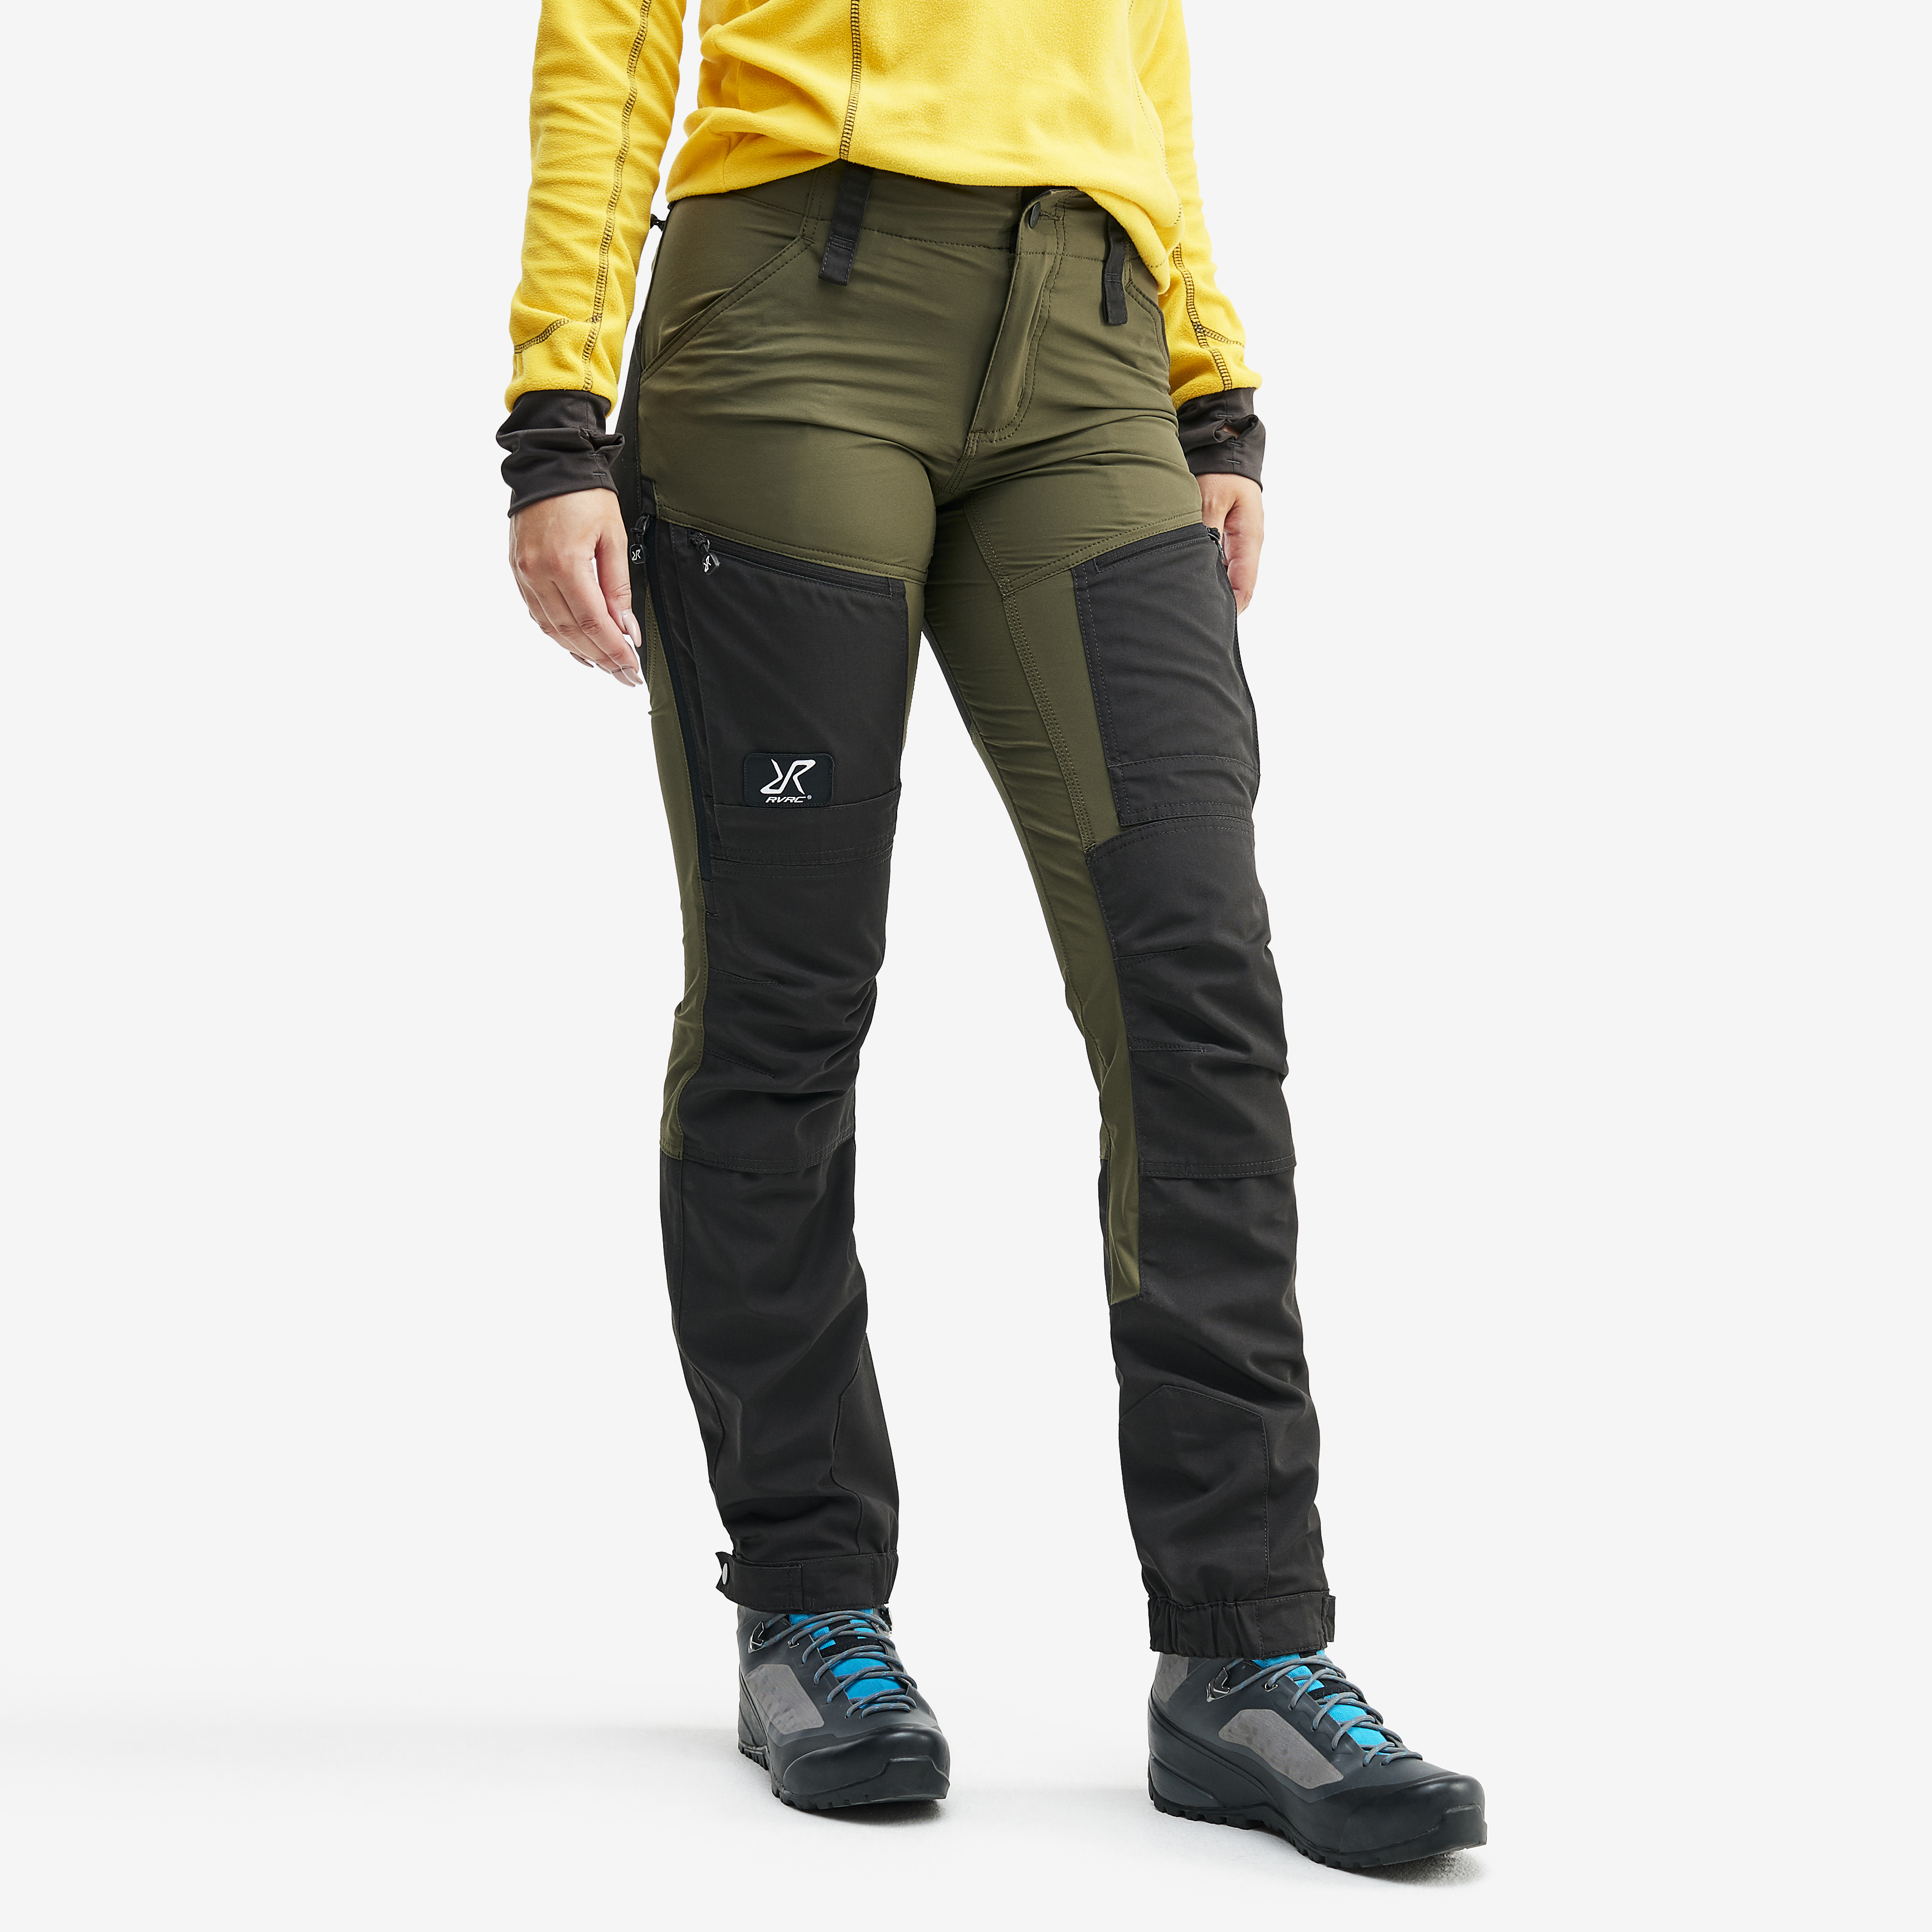 RVRC GP Pro hiking pants for women in green